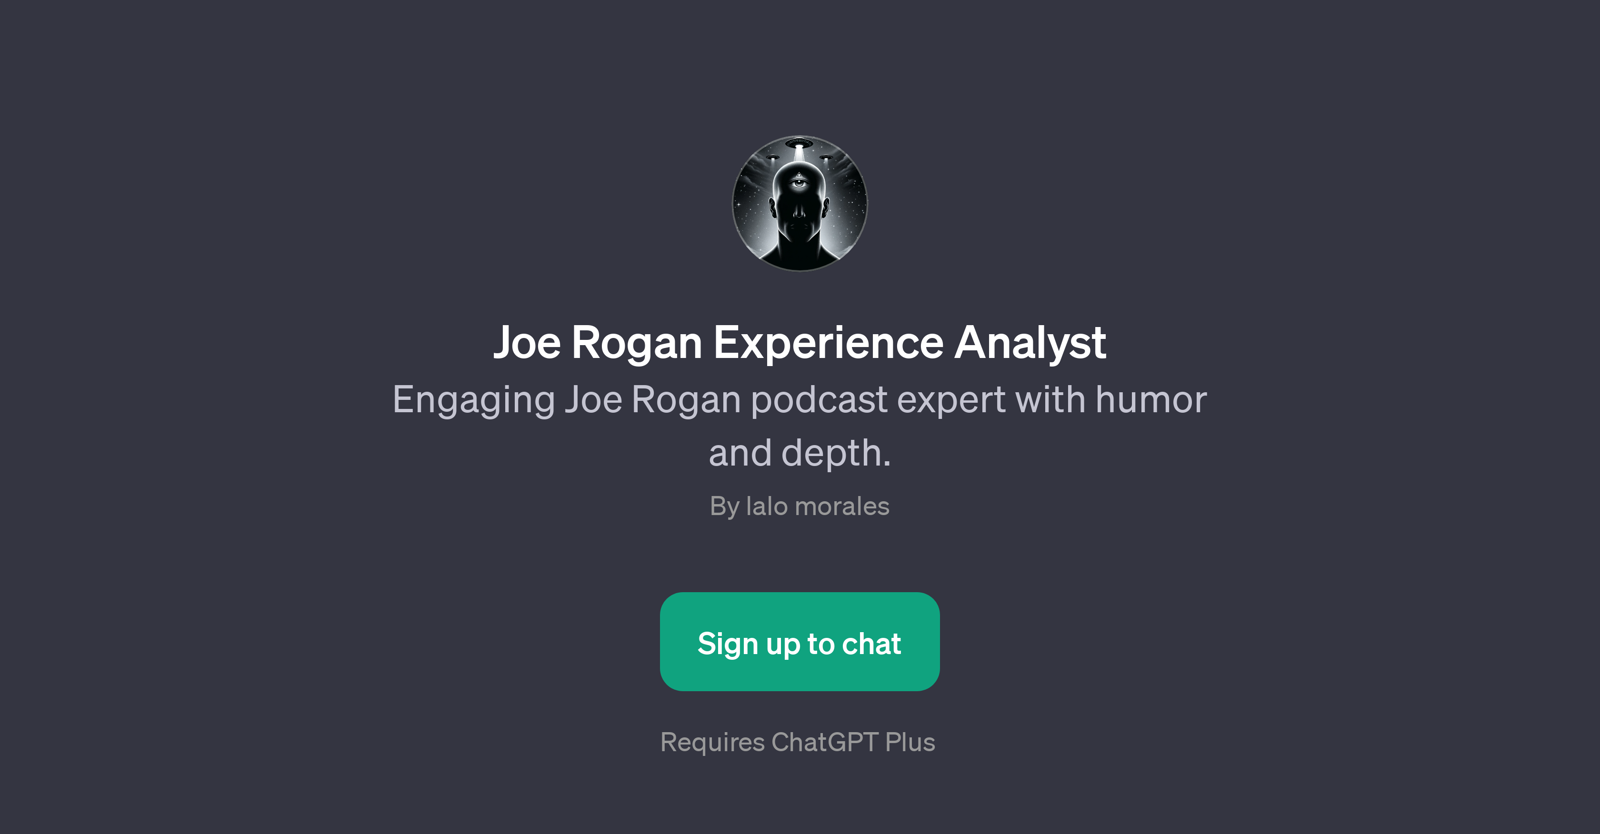 Joe Rogan Experience Analyst website